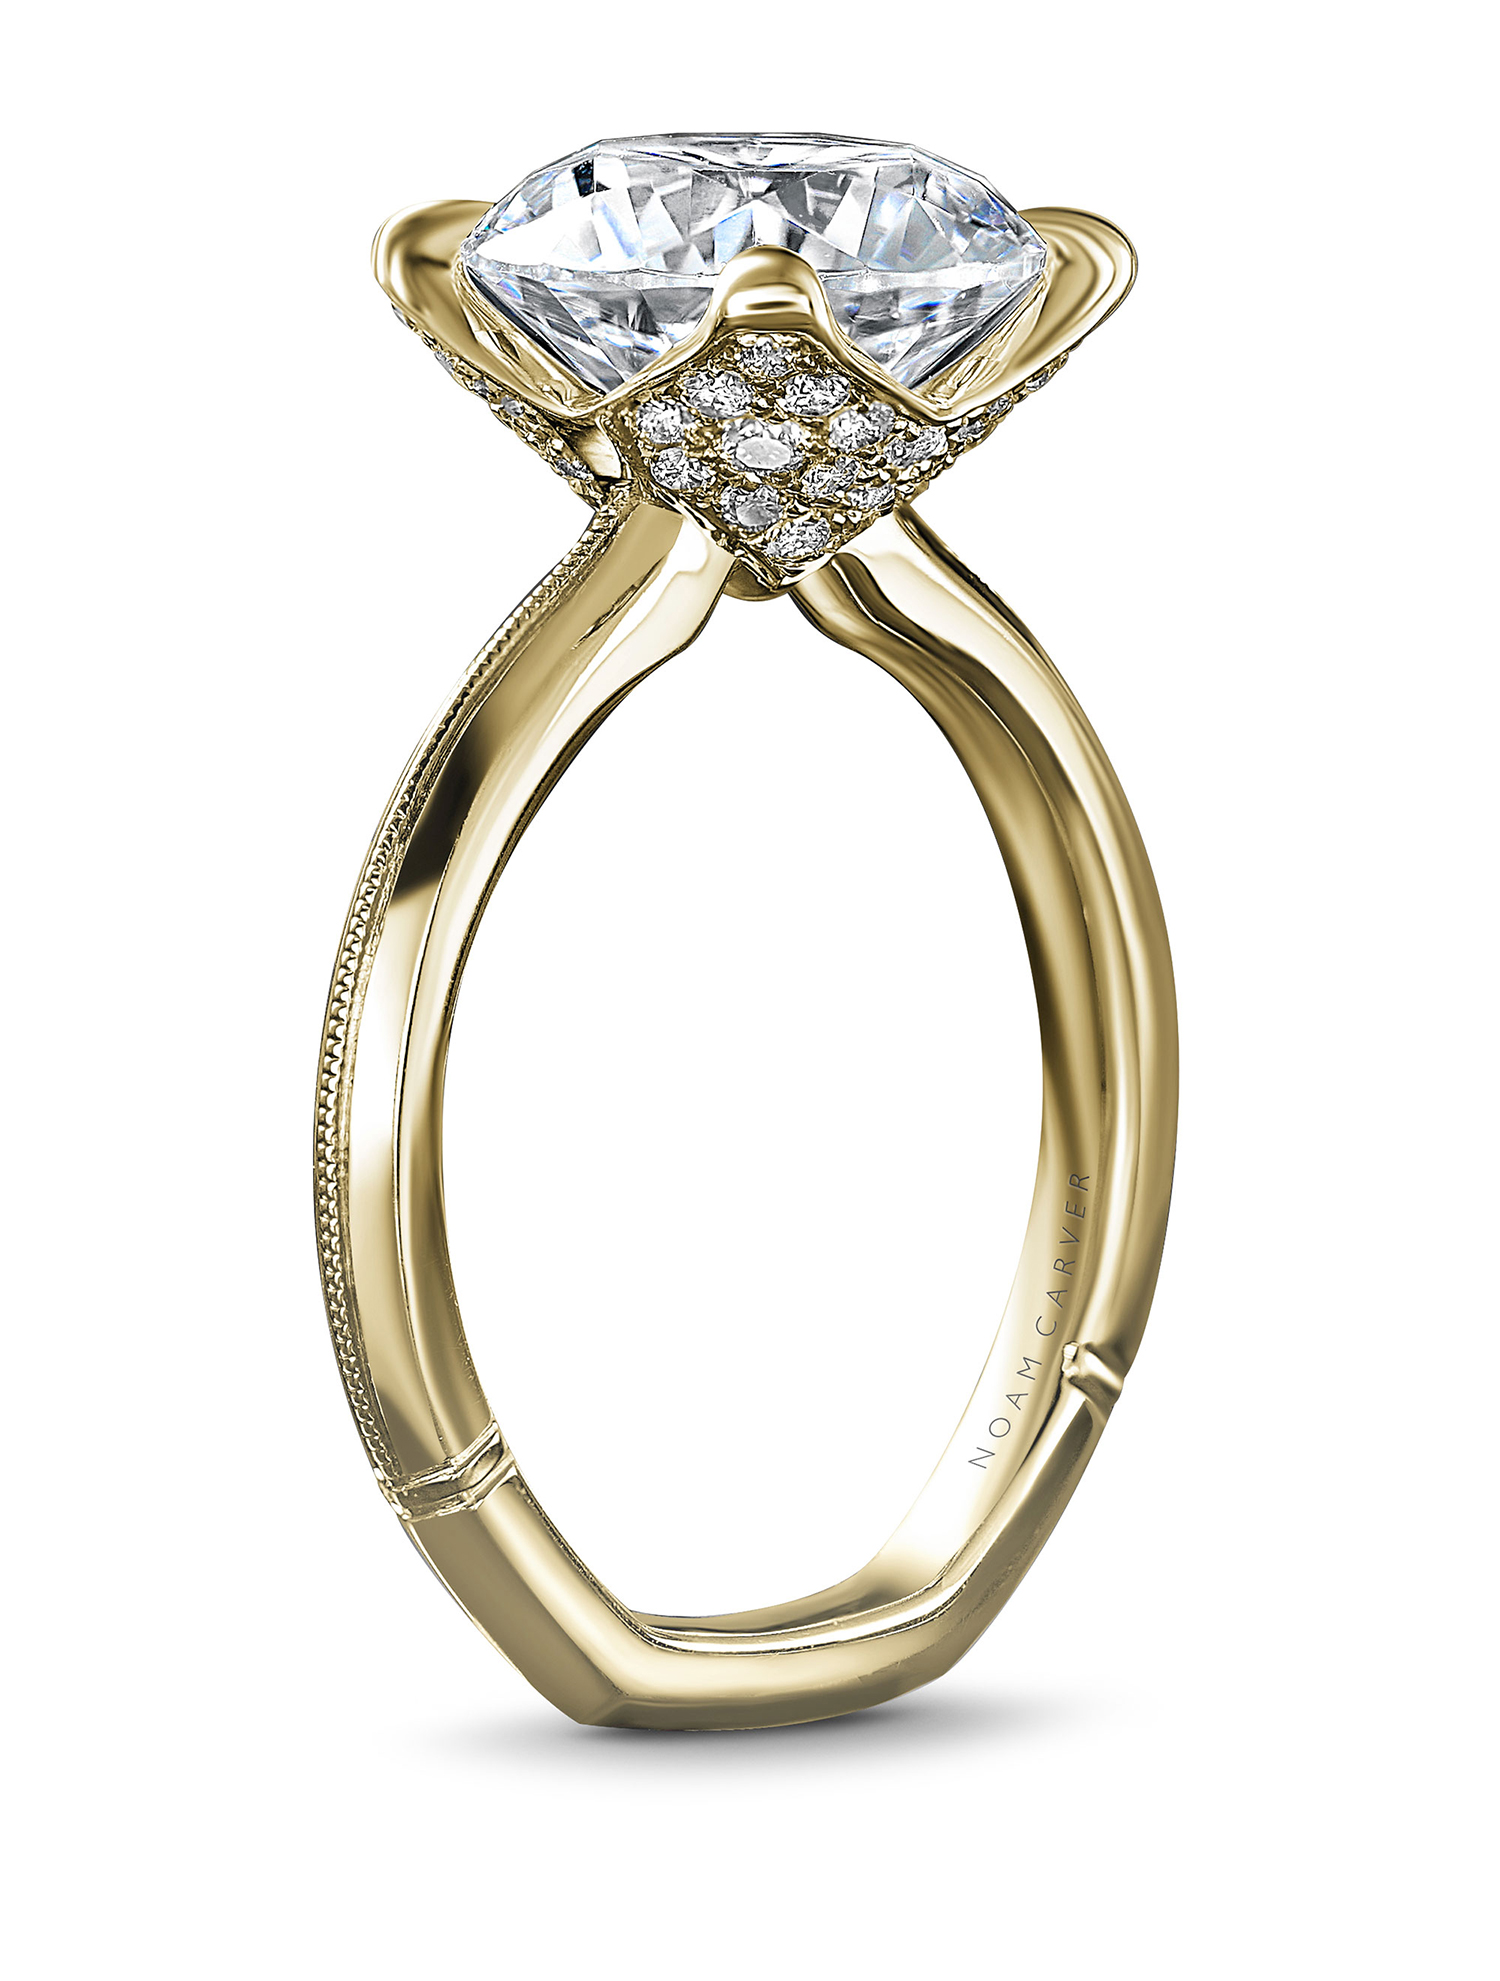 INSTORE Design Awards 2021 &#8211; Best Engagement/Wedding Jewelry Under $5,000